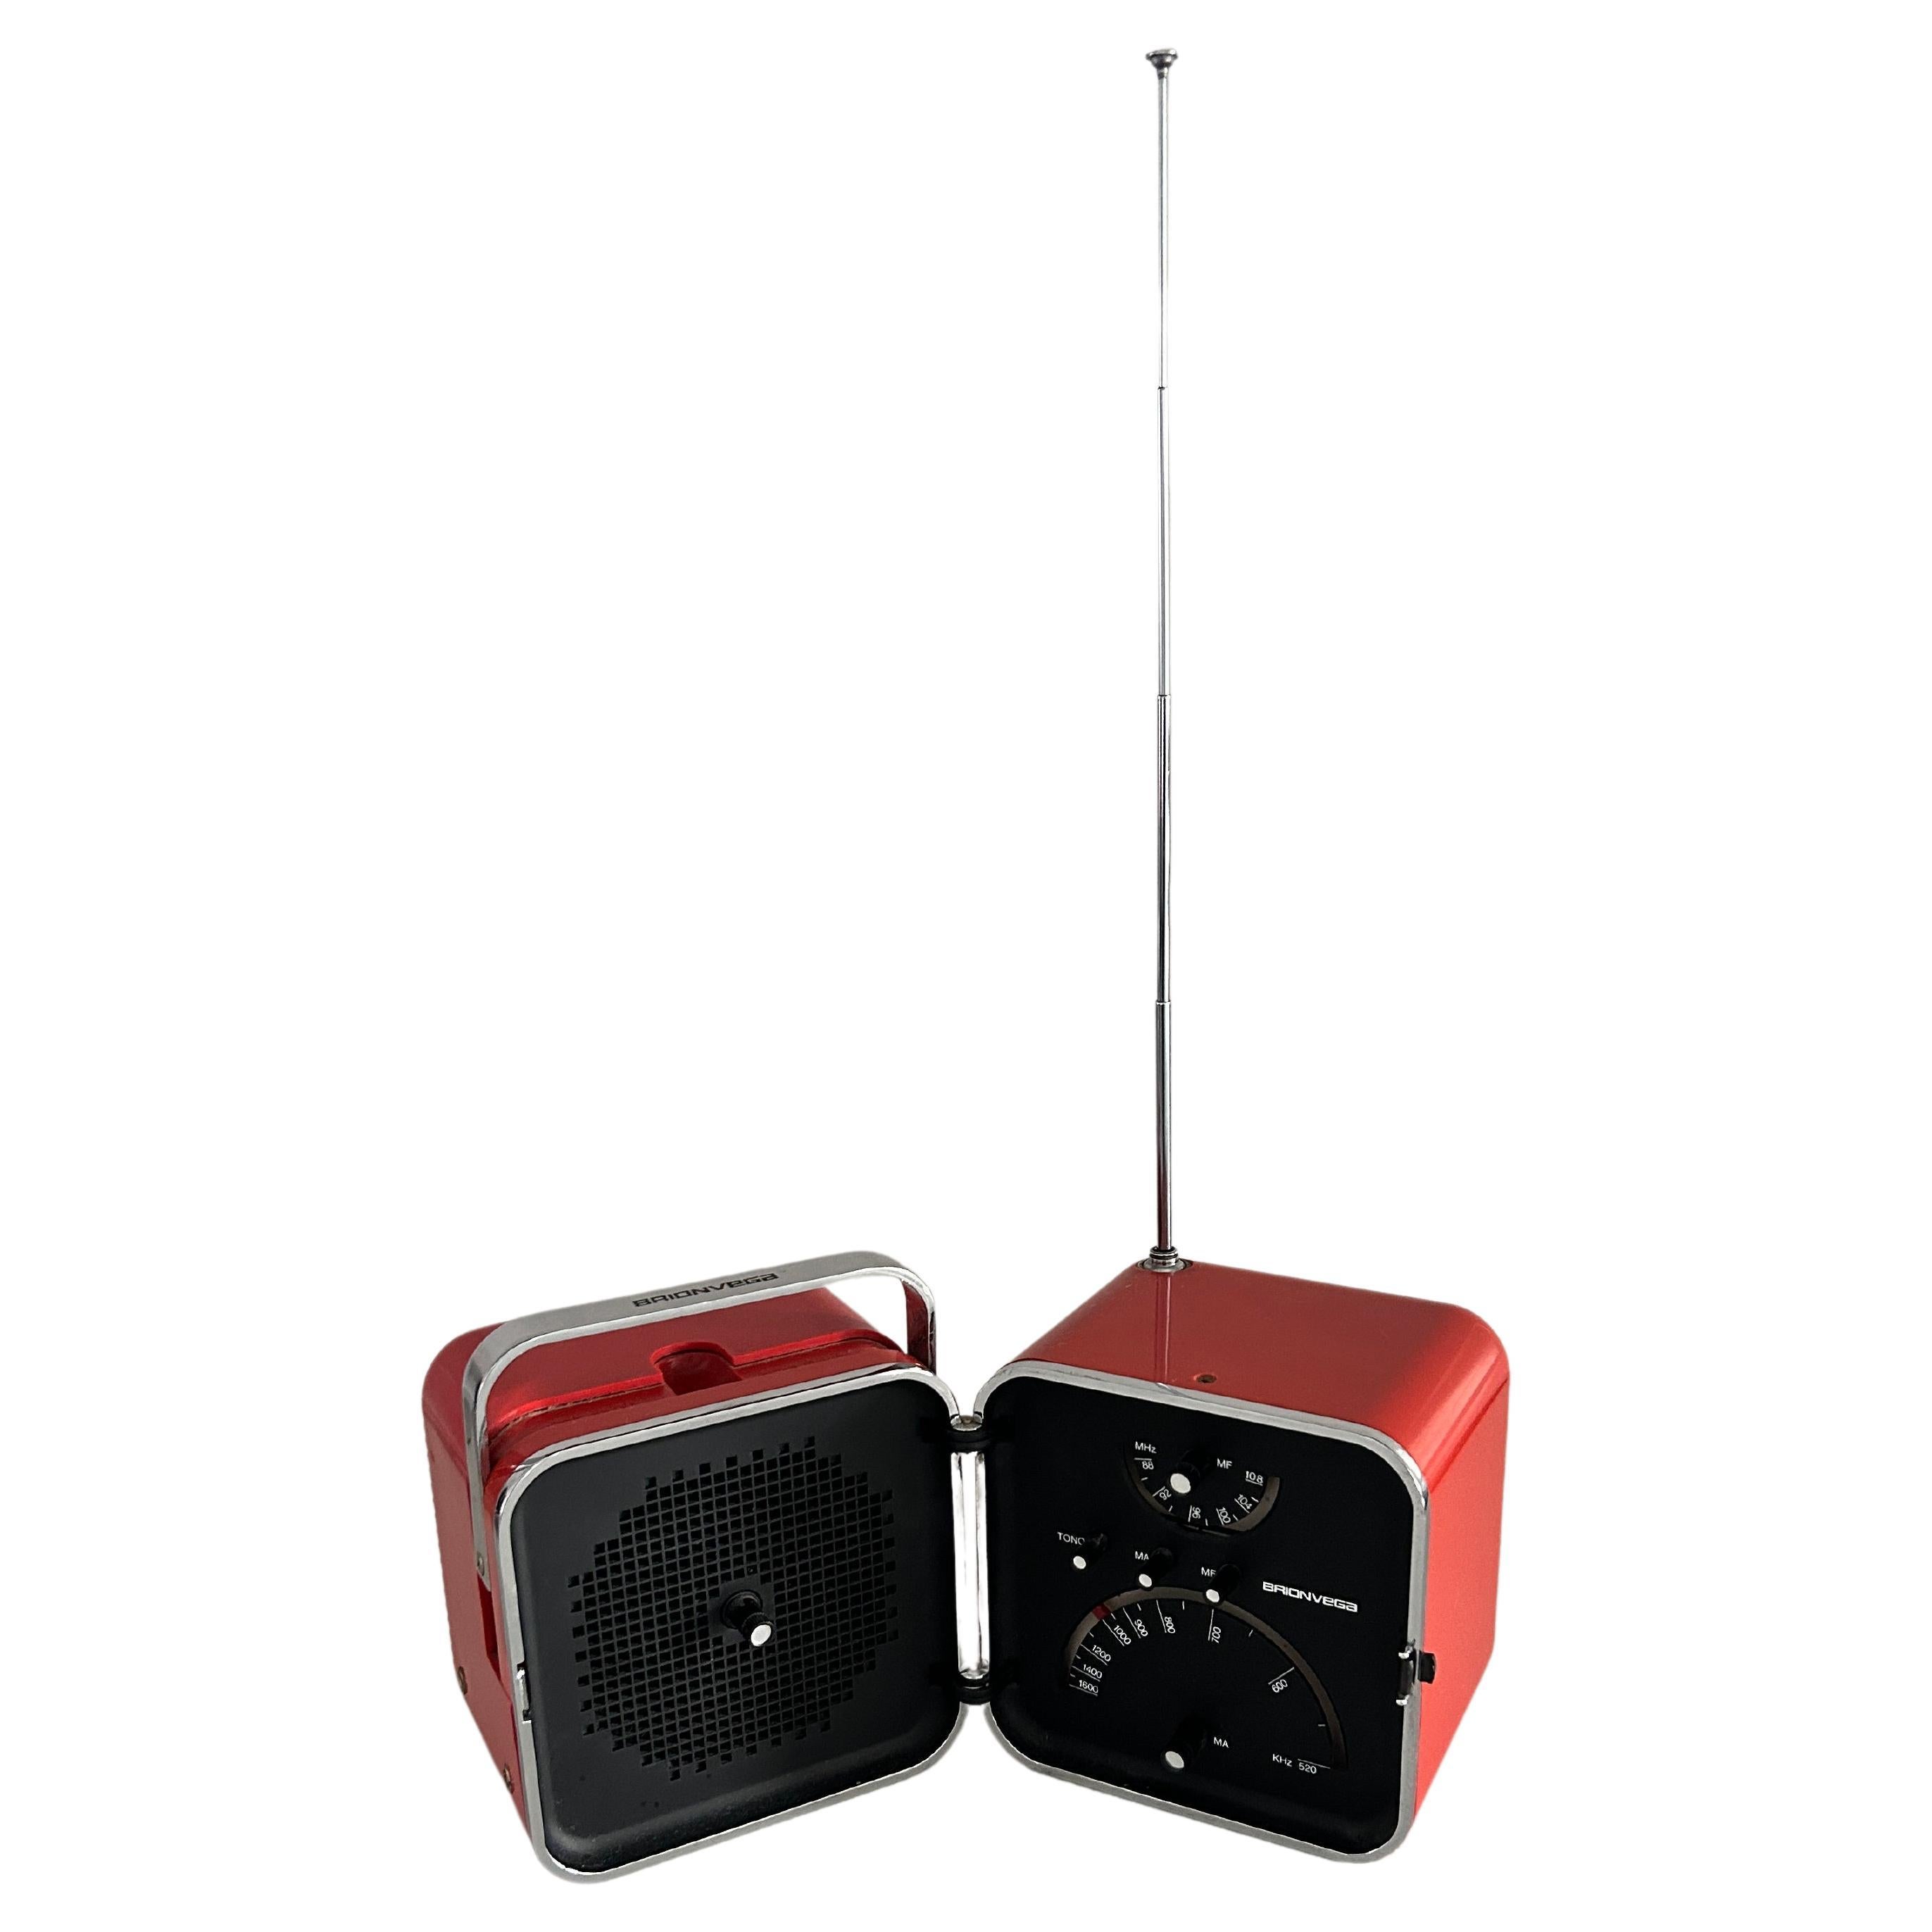 Radio Cube Brionvega mod. TS502, Richard Sapper und Marco Zanuso im Angebot